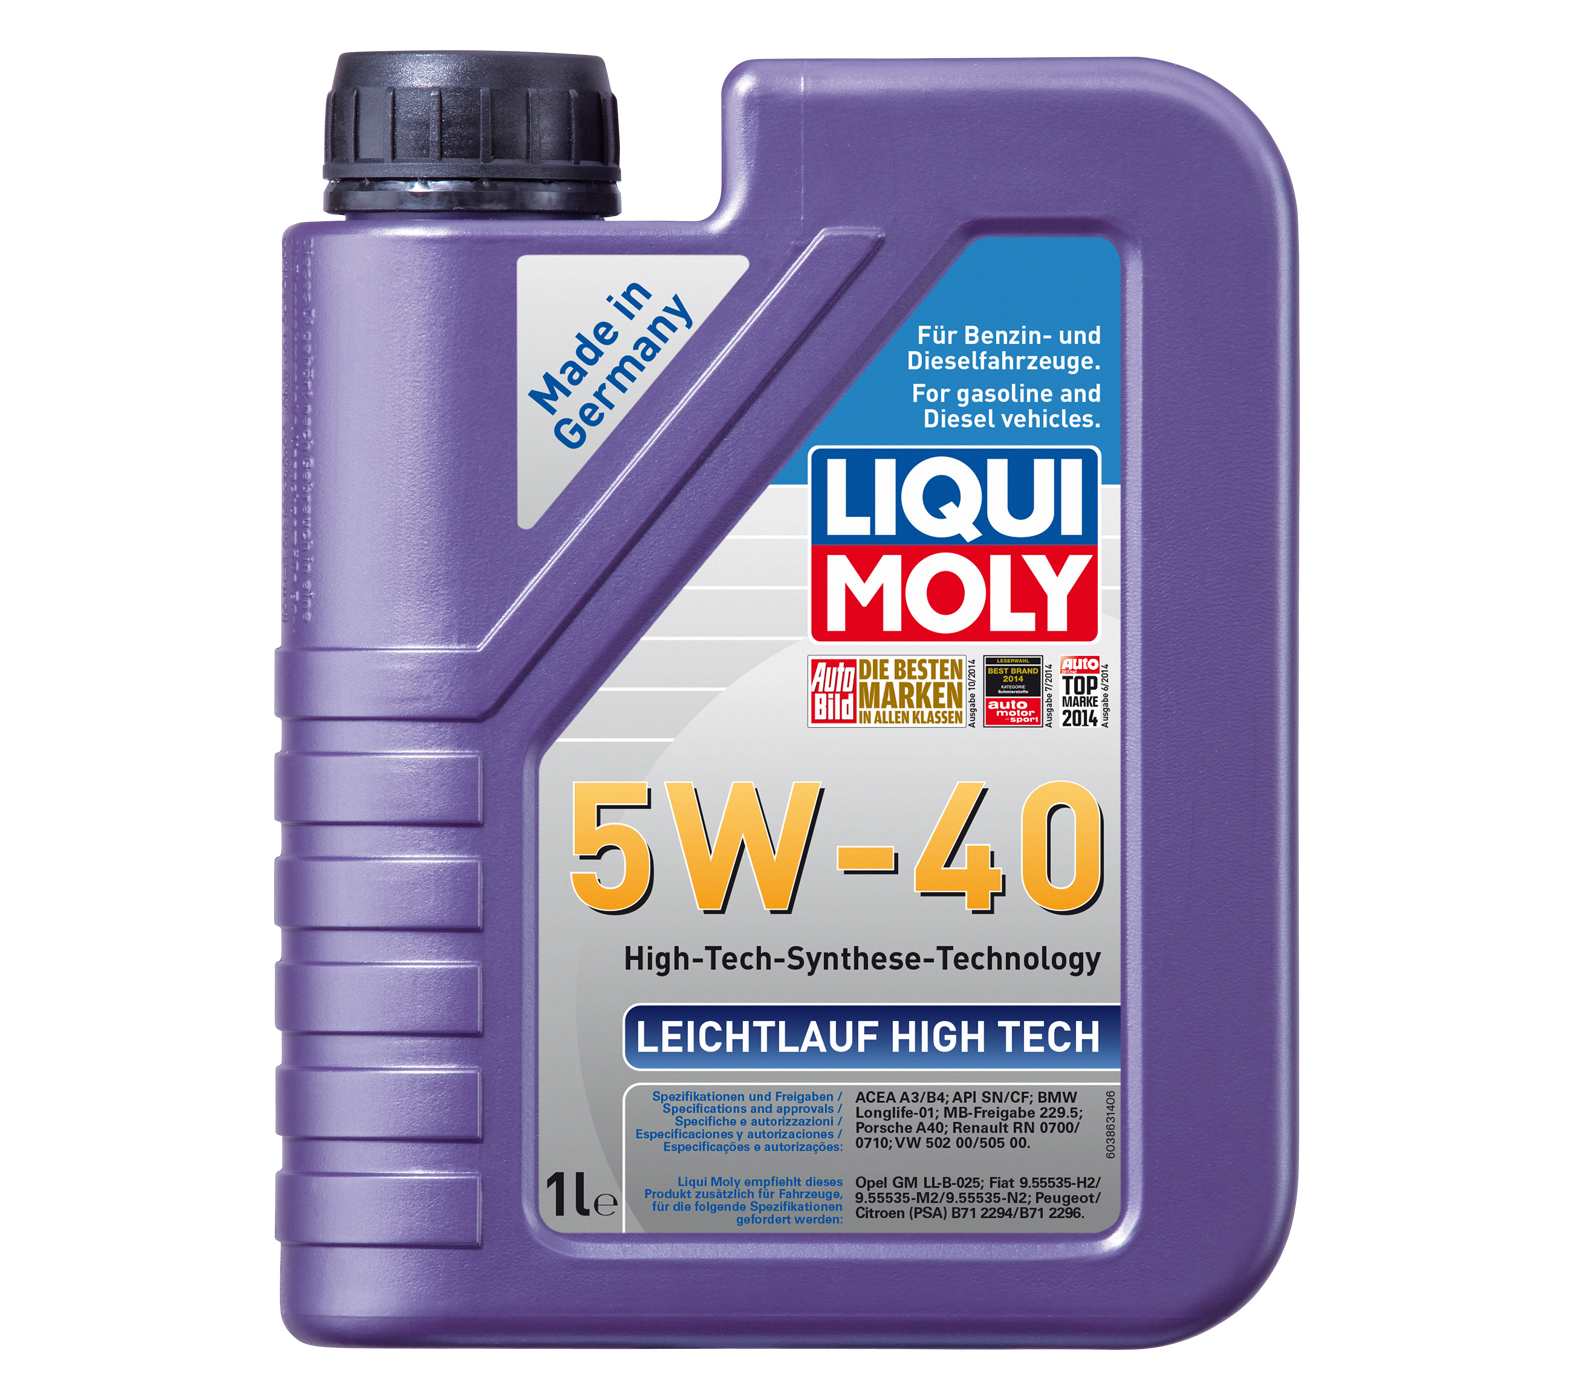 LIQUI MOLY Leichtlauf High Tech 5W-40 1 L